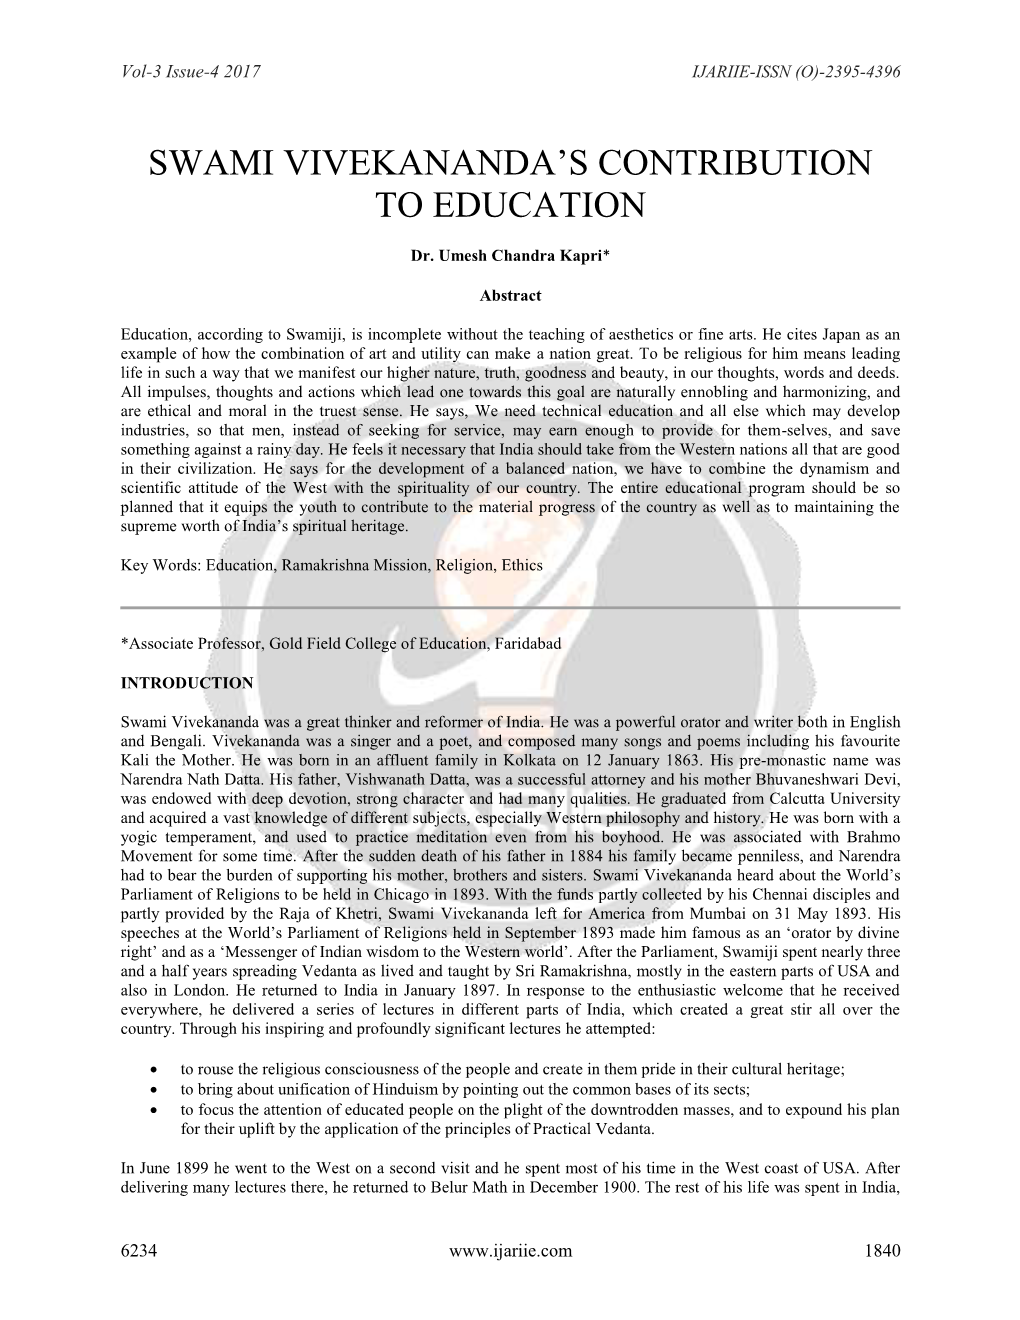 Swami Vivekananda‟S Contribution to Education